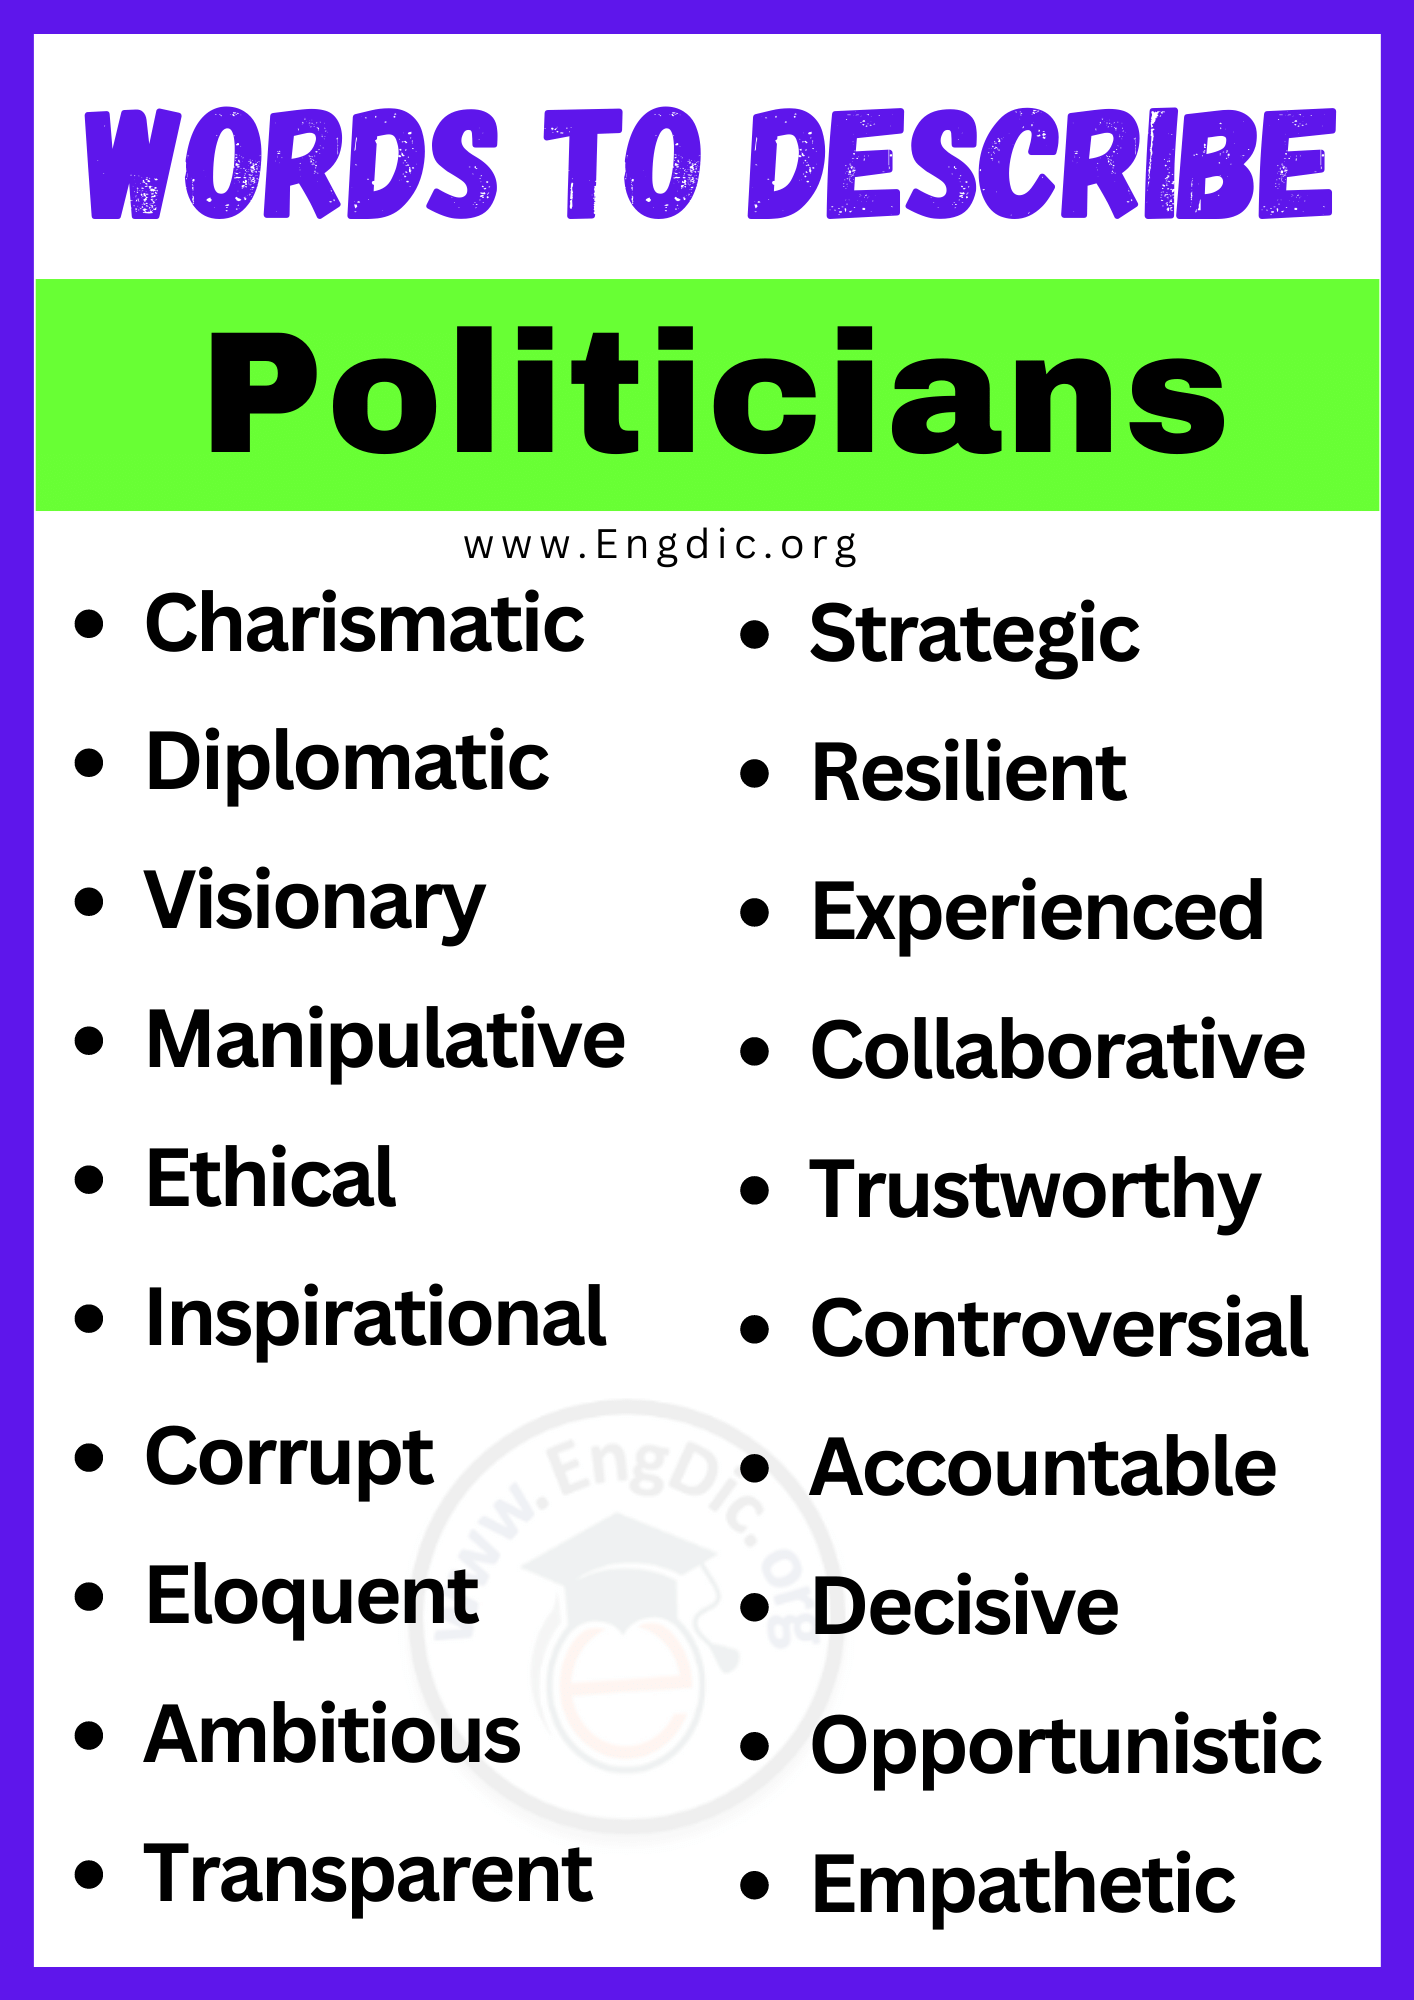 Words to Describe Politicians